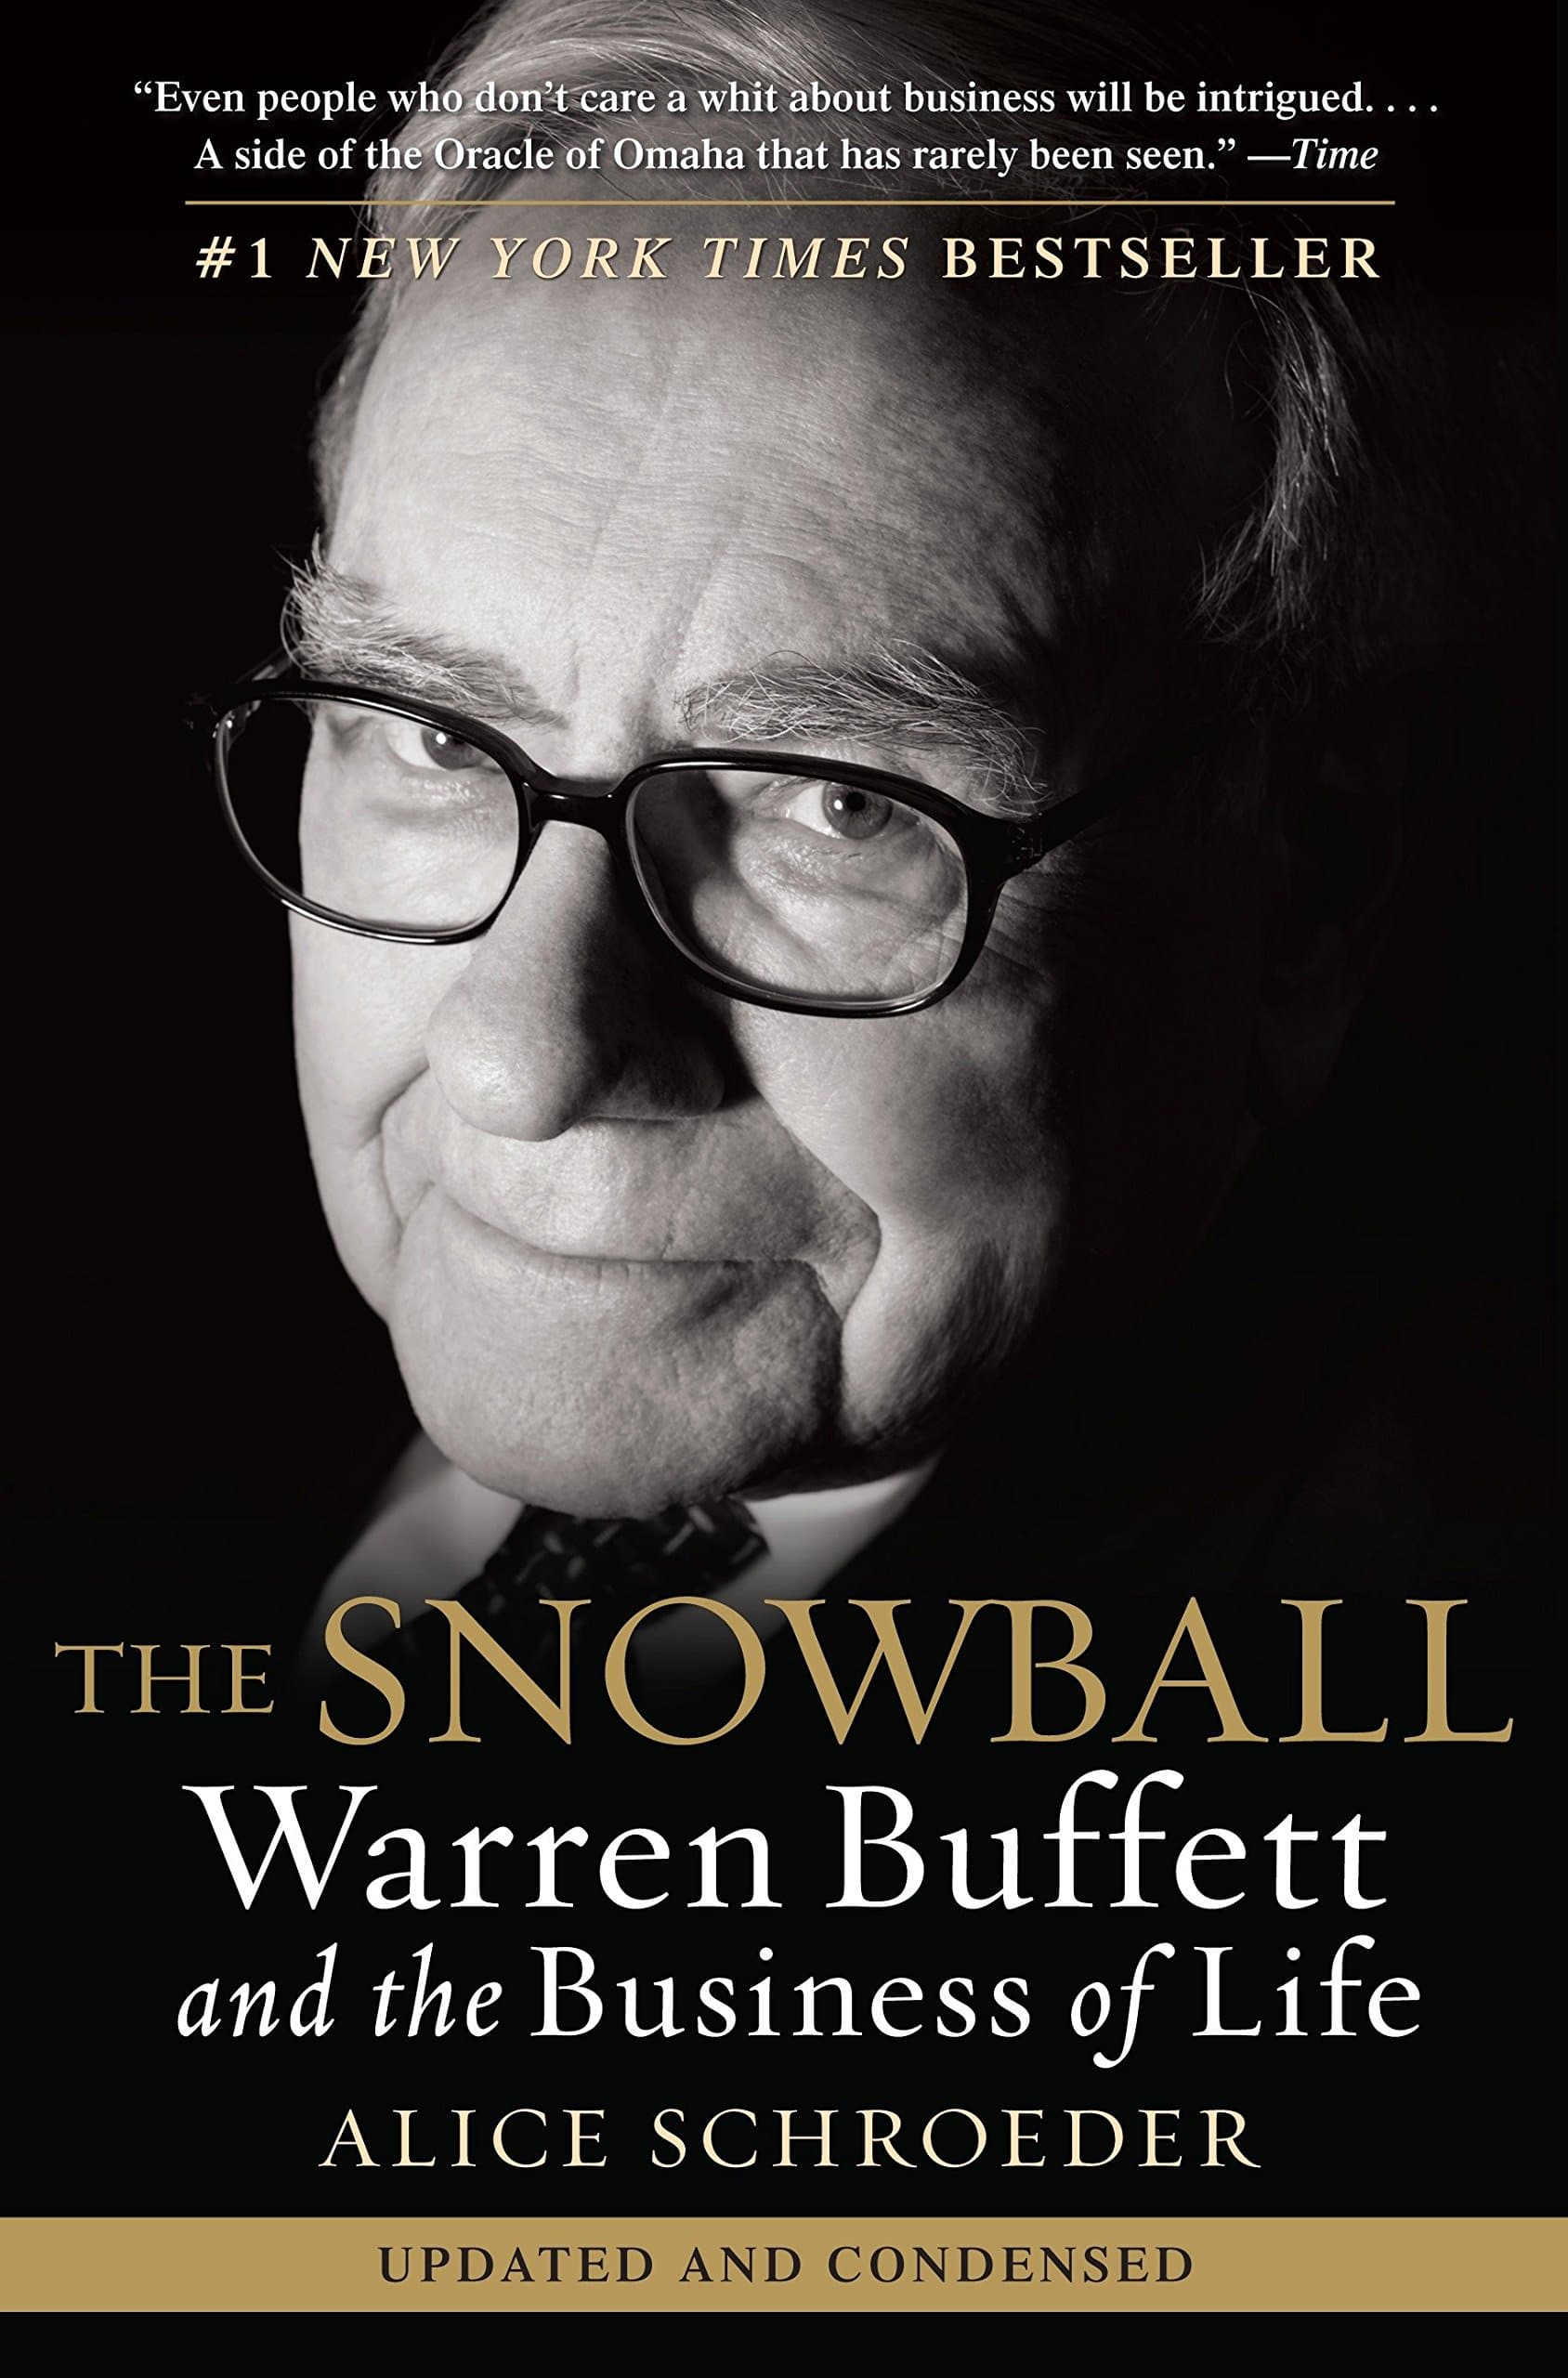 The Snowball – Warren Buffett and the Business of Life